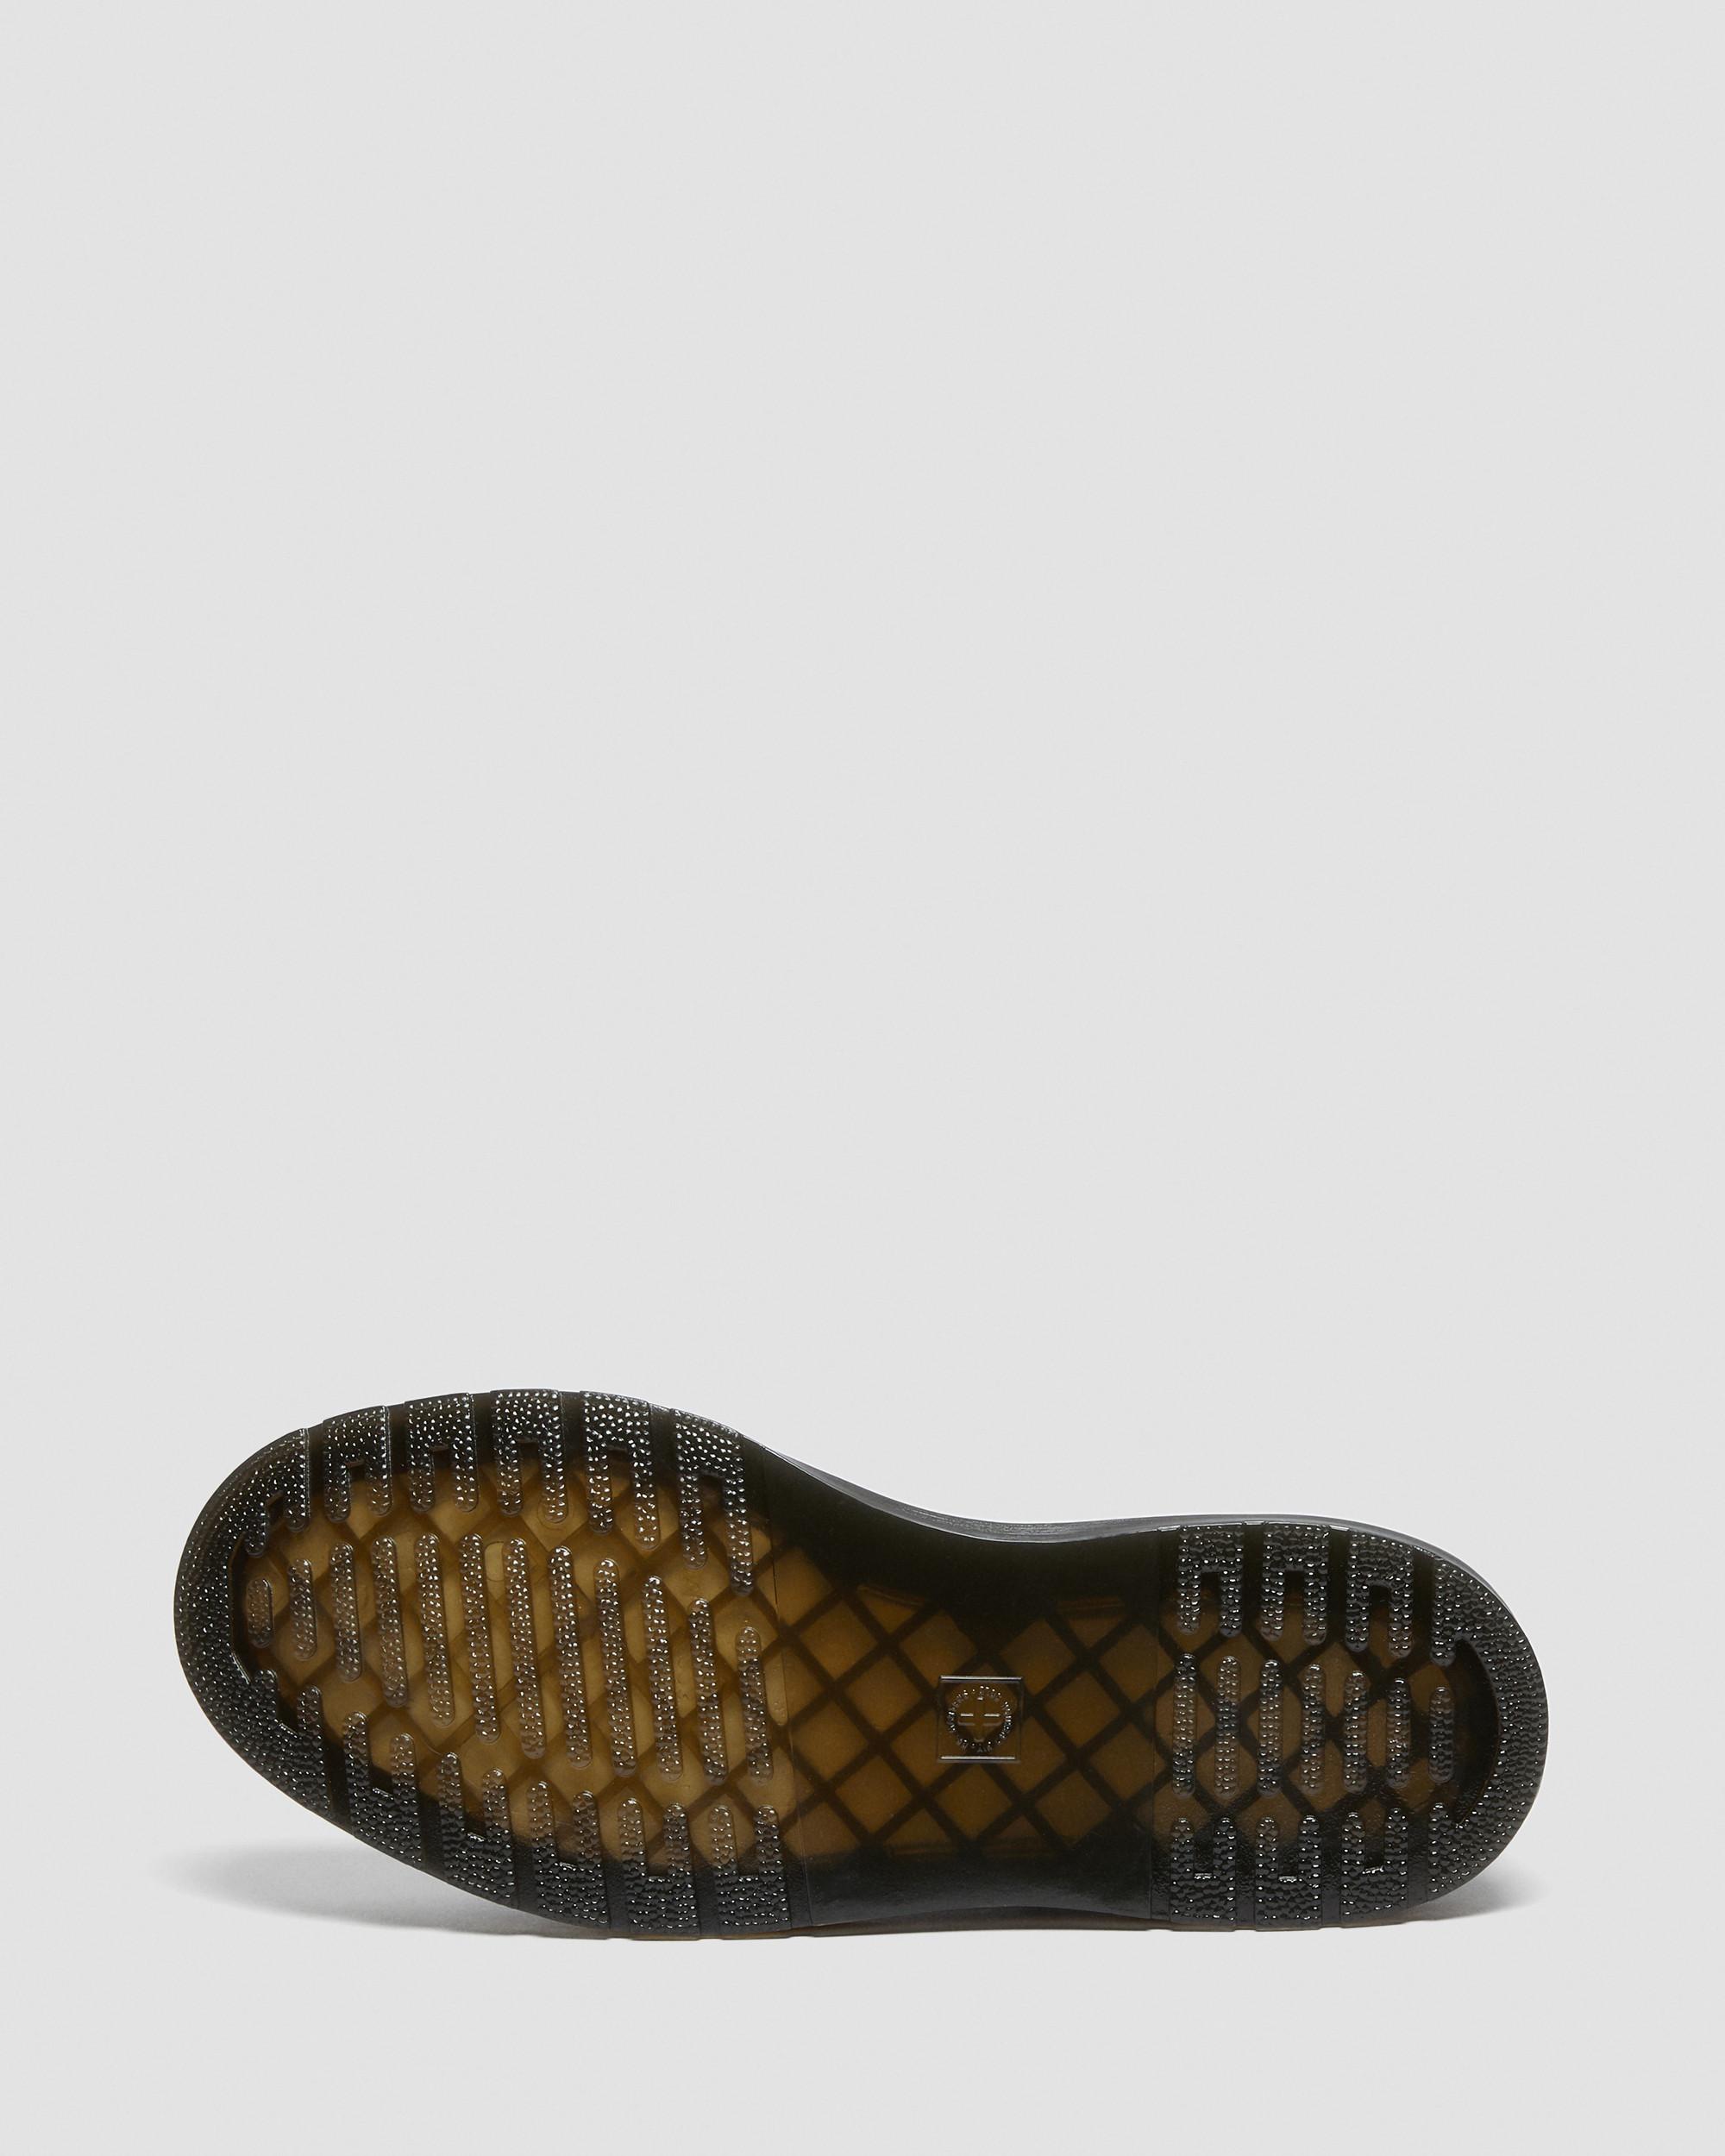 Dante Brando Leather Casual Shoes in Black